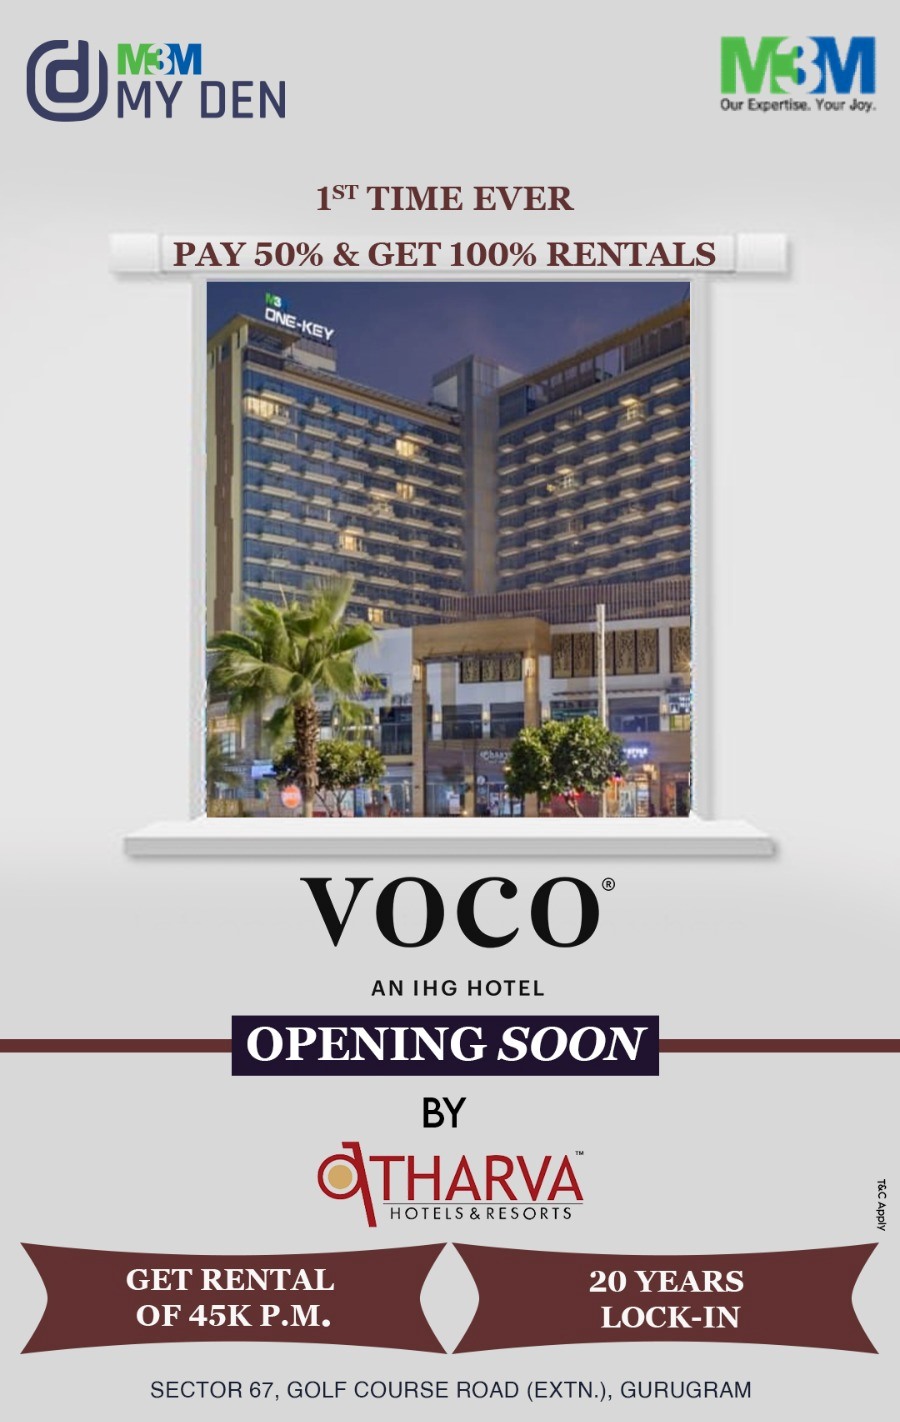 M3M My Den Voco an IHG Hotel by Atharva Hotels & Resorts at Sector 67, Gurgaon